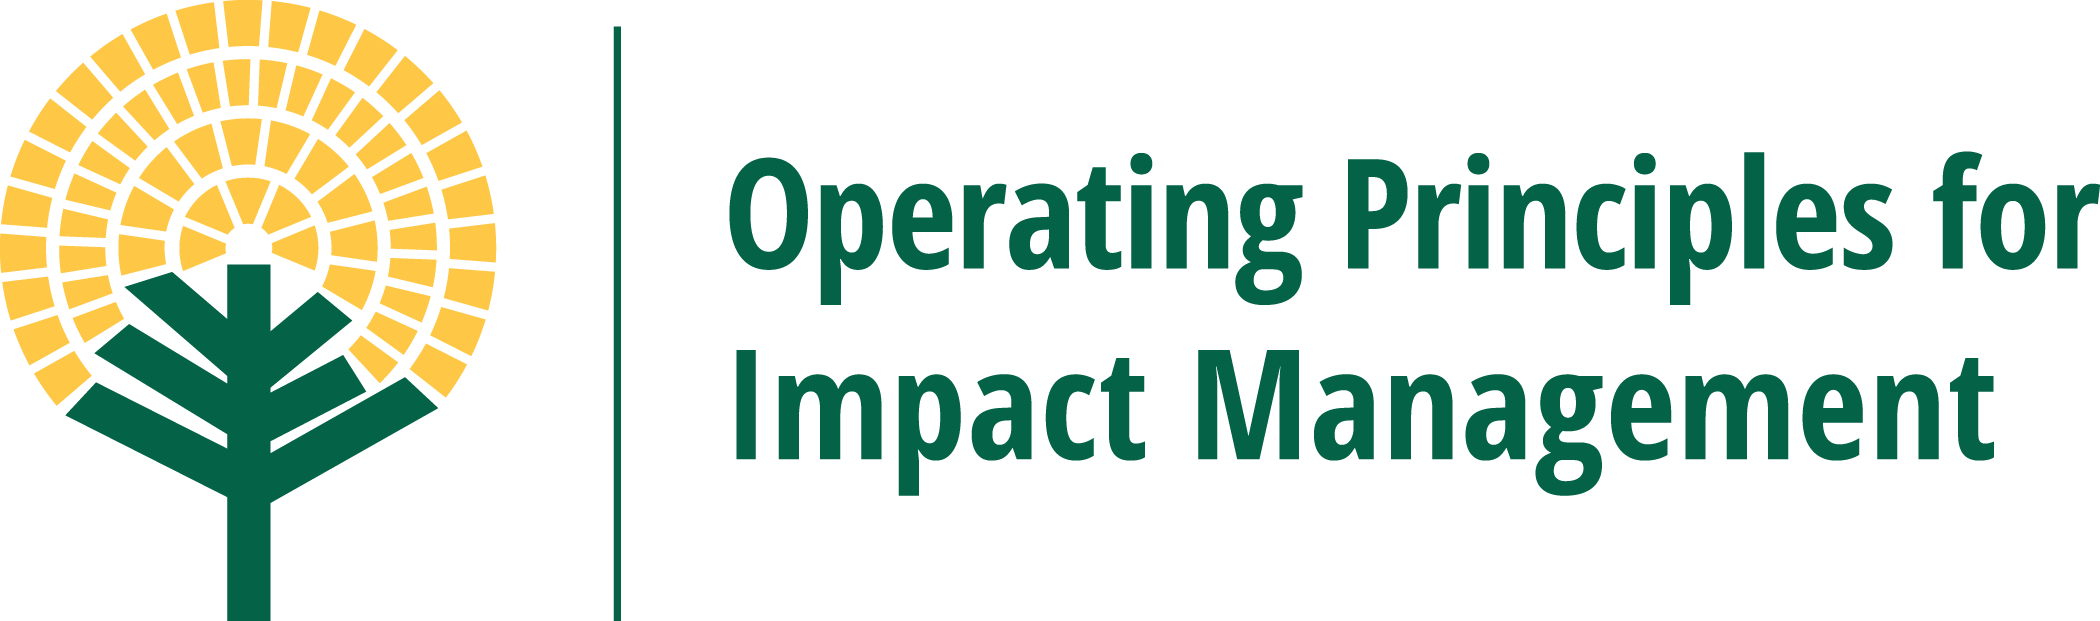 Operating Principles for Impact Management Logo